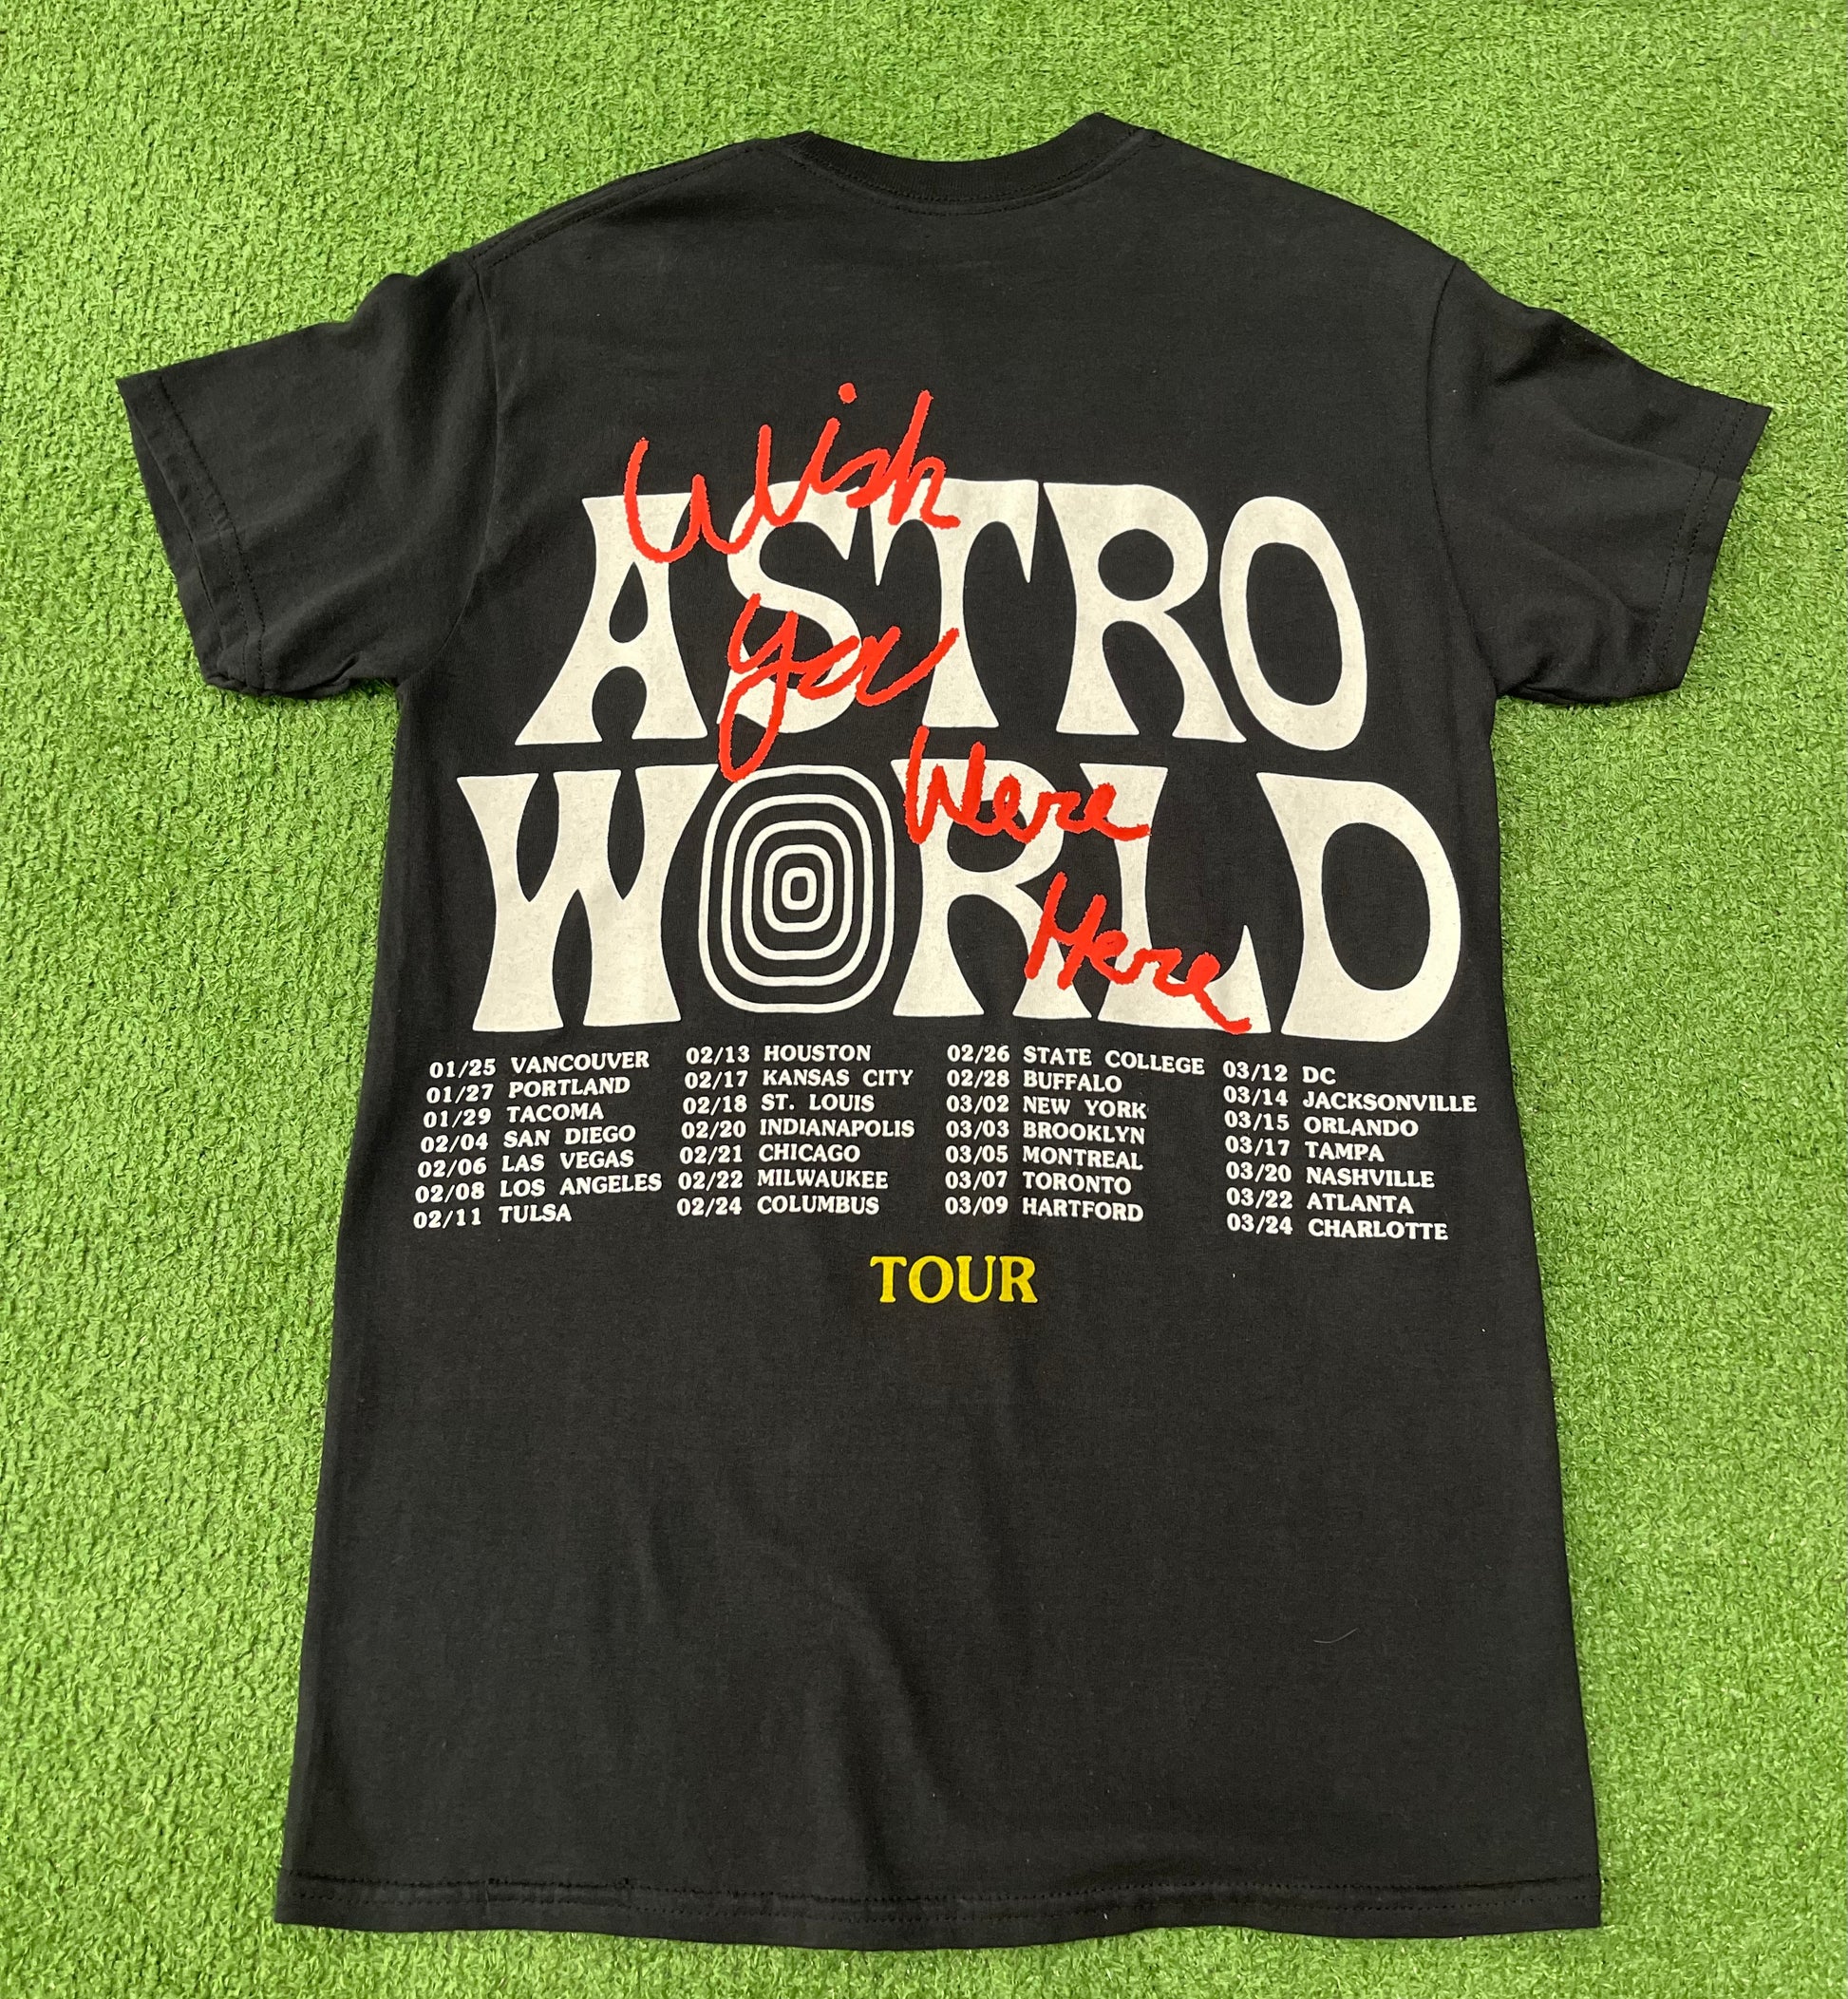 Travis Scott Astroworld Tour Wish You Were Here Tee Black, T-Shirt - Sneakersbe Sneakers Sale Online